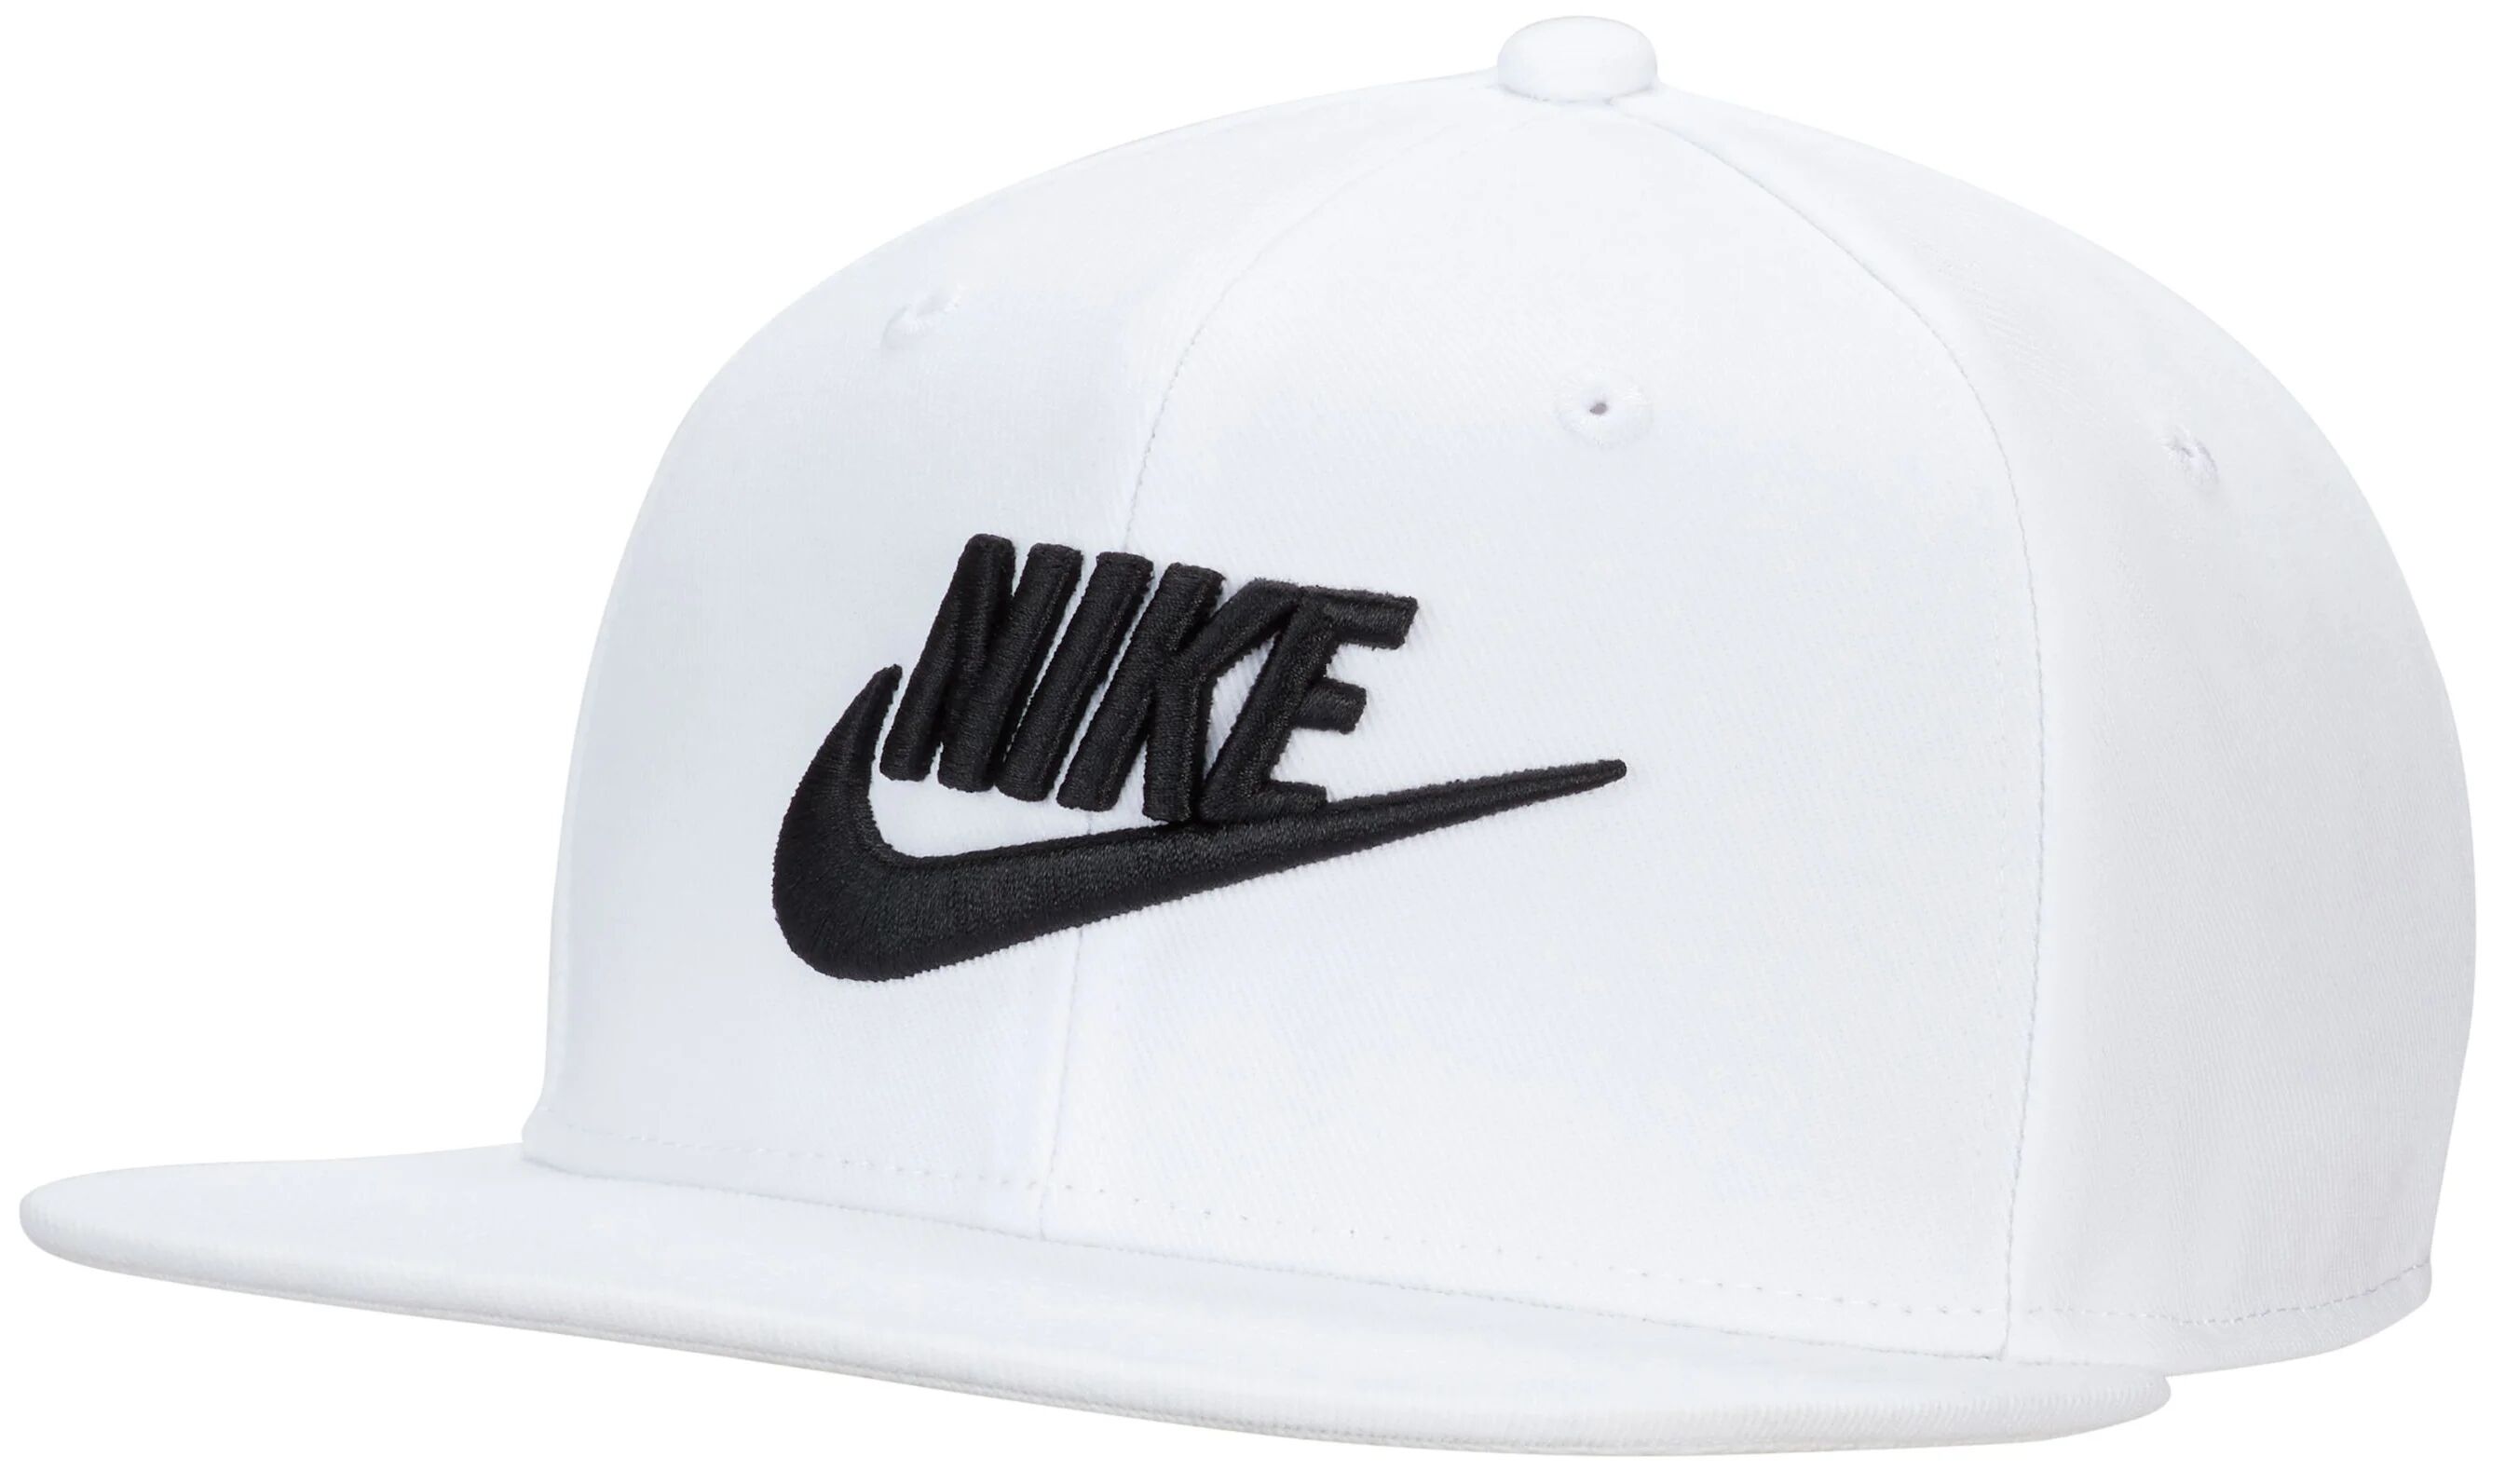 Nike Dri-FIT Pro Structured Futura Men's Golf Hat - White, Size: Large/X-Large